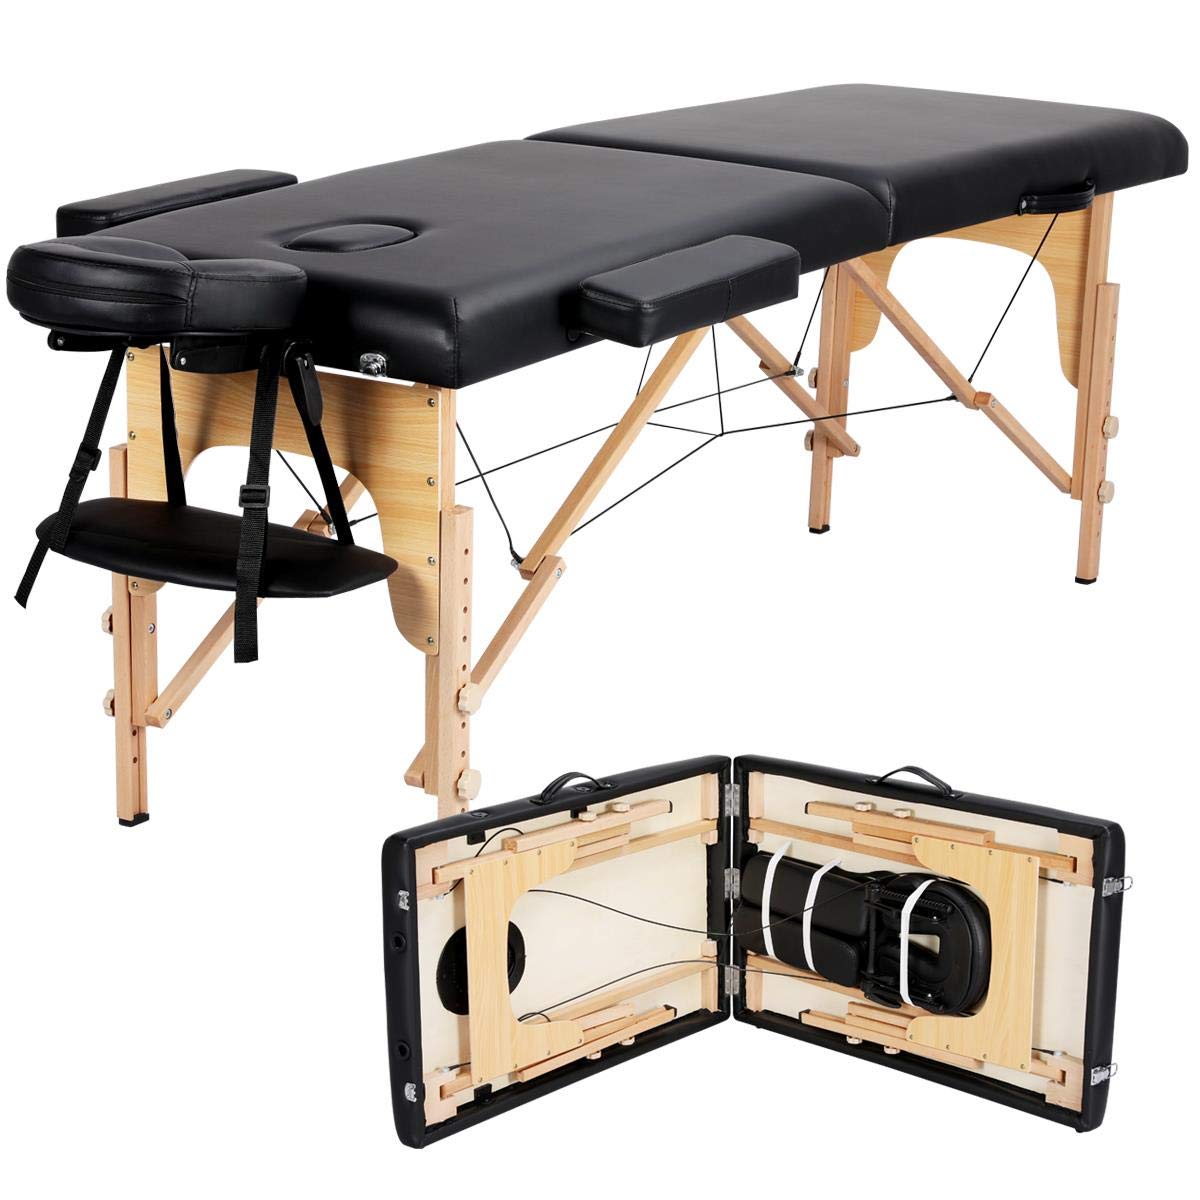  9. Yaheetech Portable Massage Table 